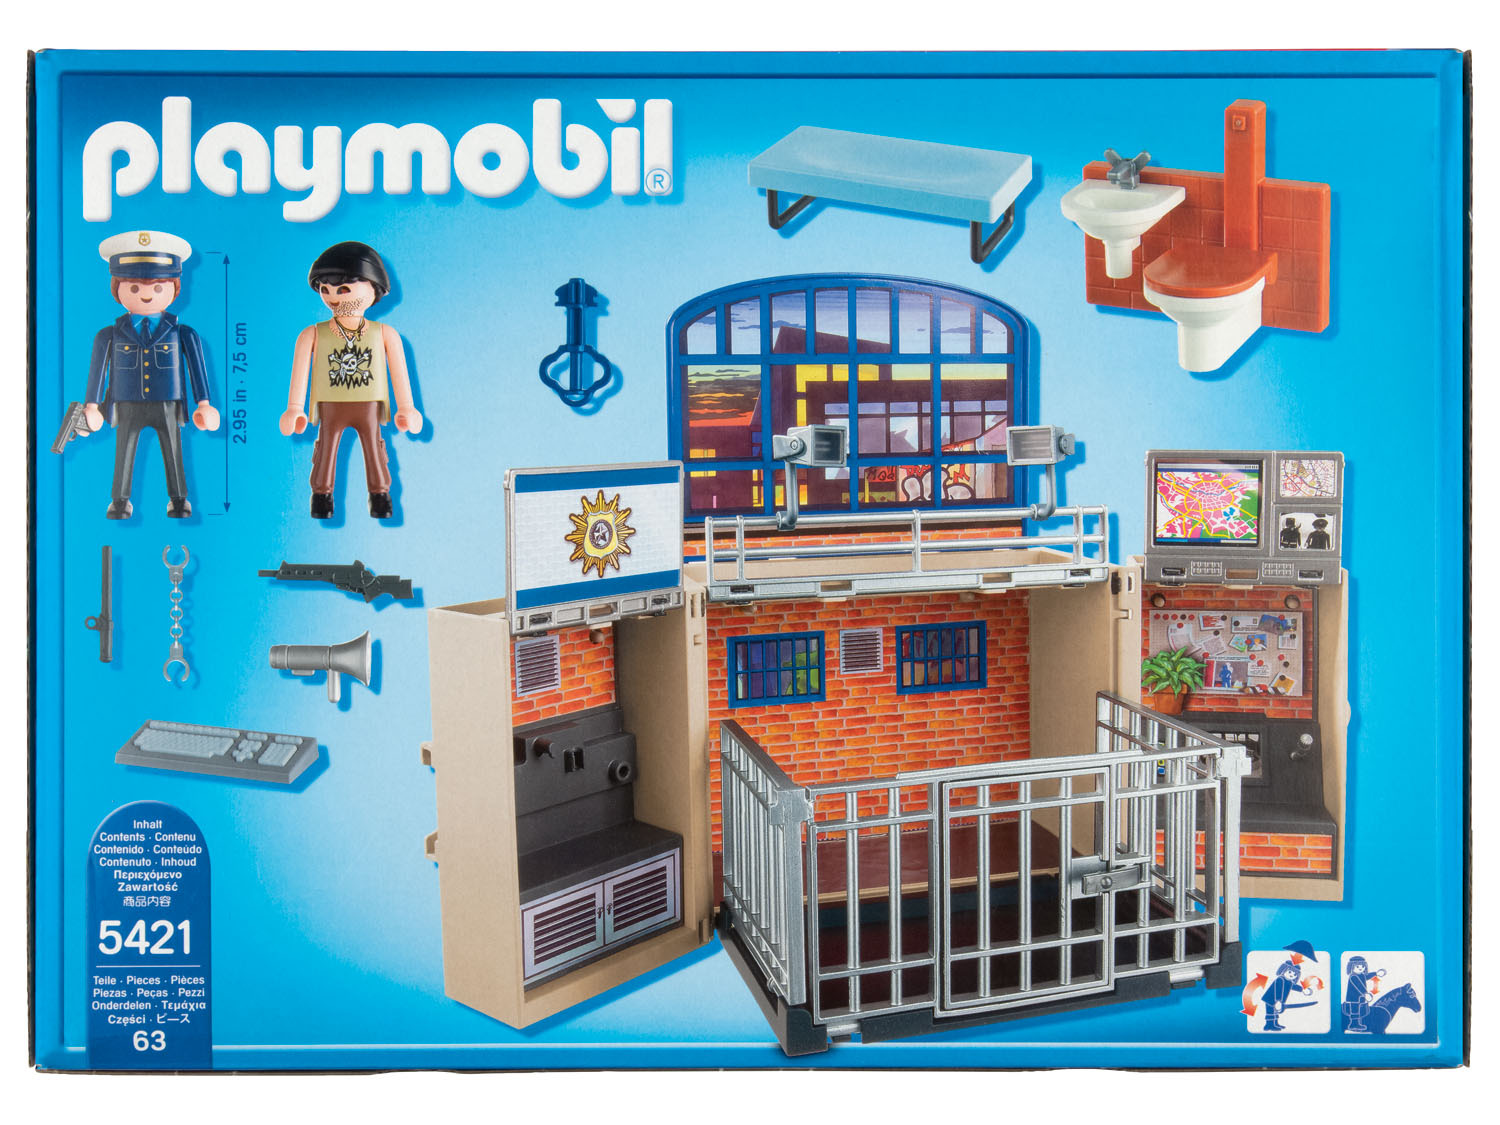 Vulkaan Misbruik Onzorgvuldigheid Playmobil Speelset online kopen | LIDL